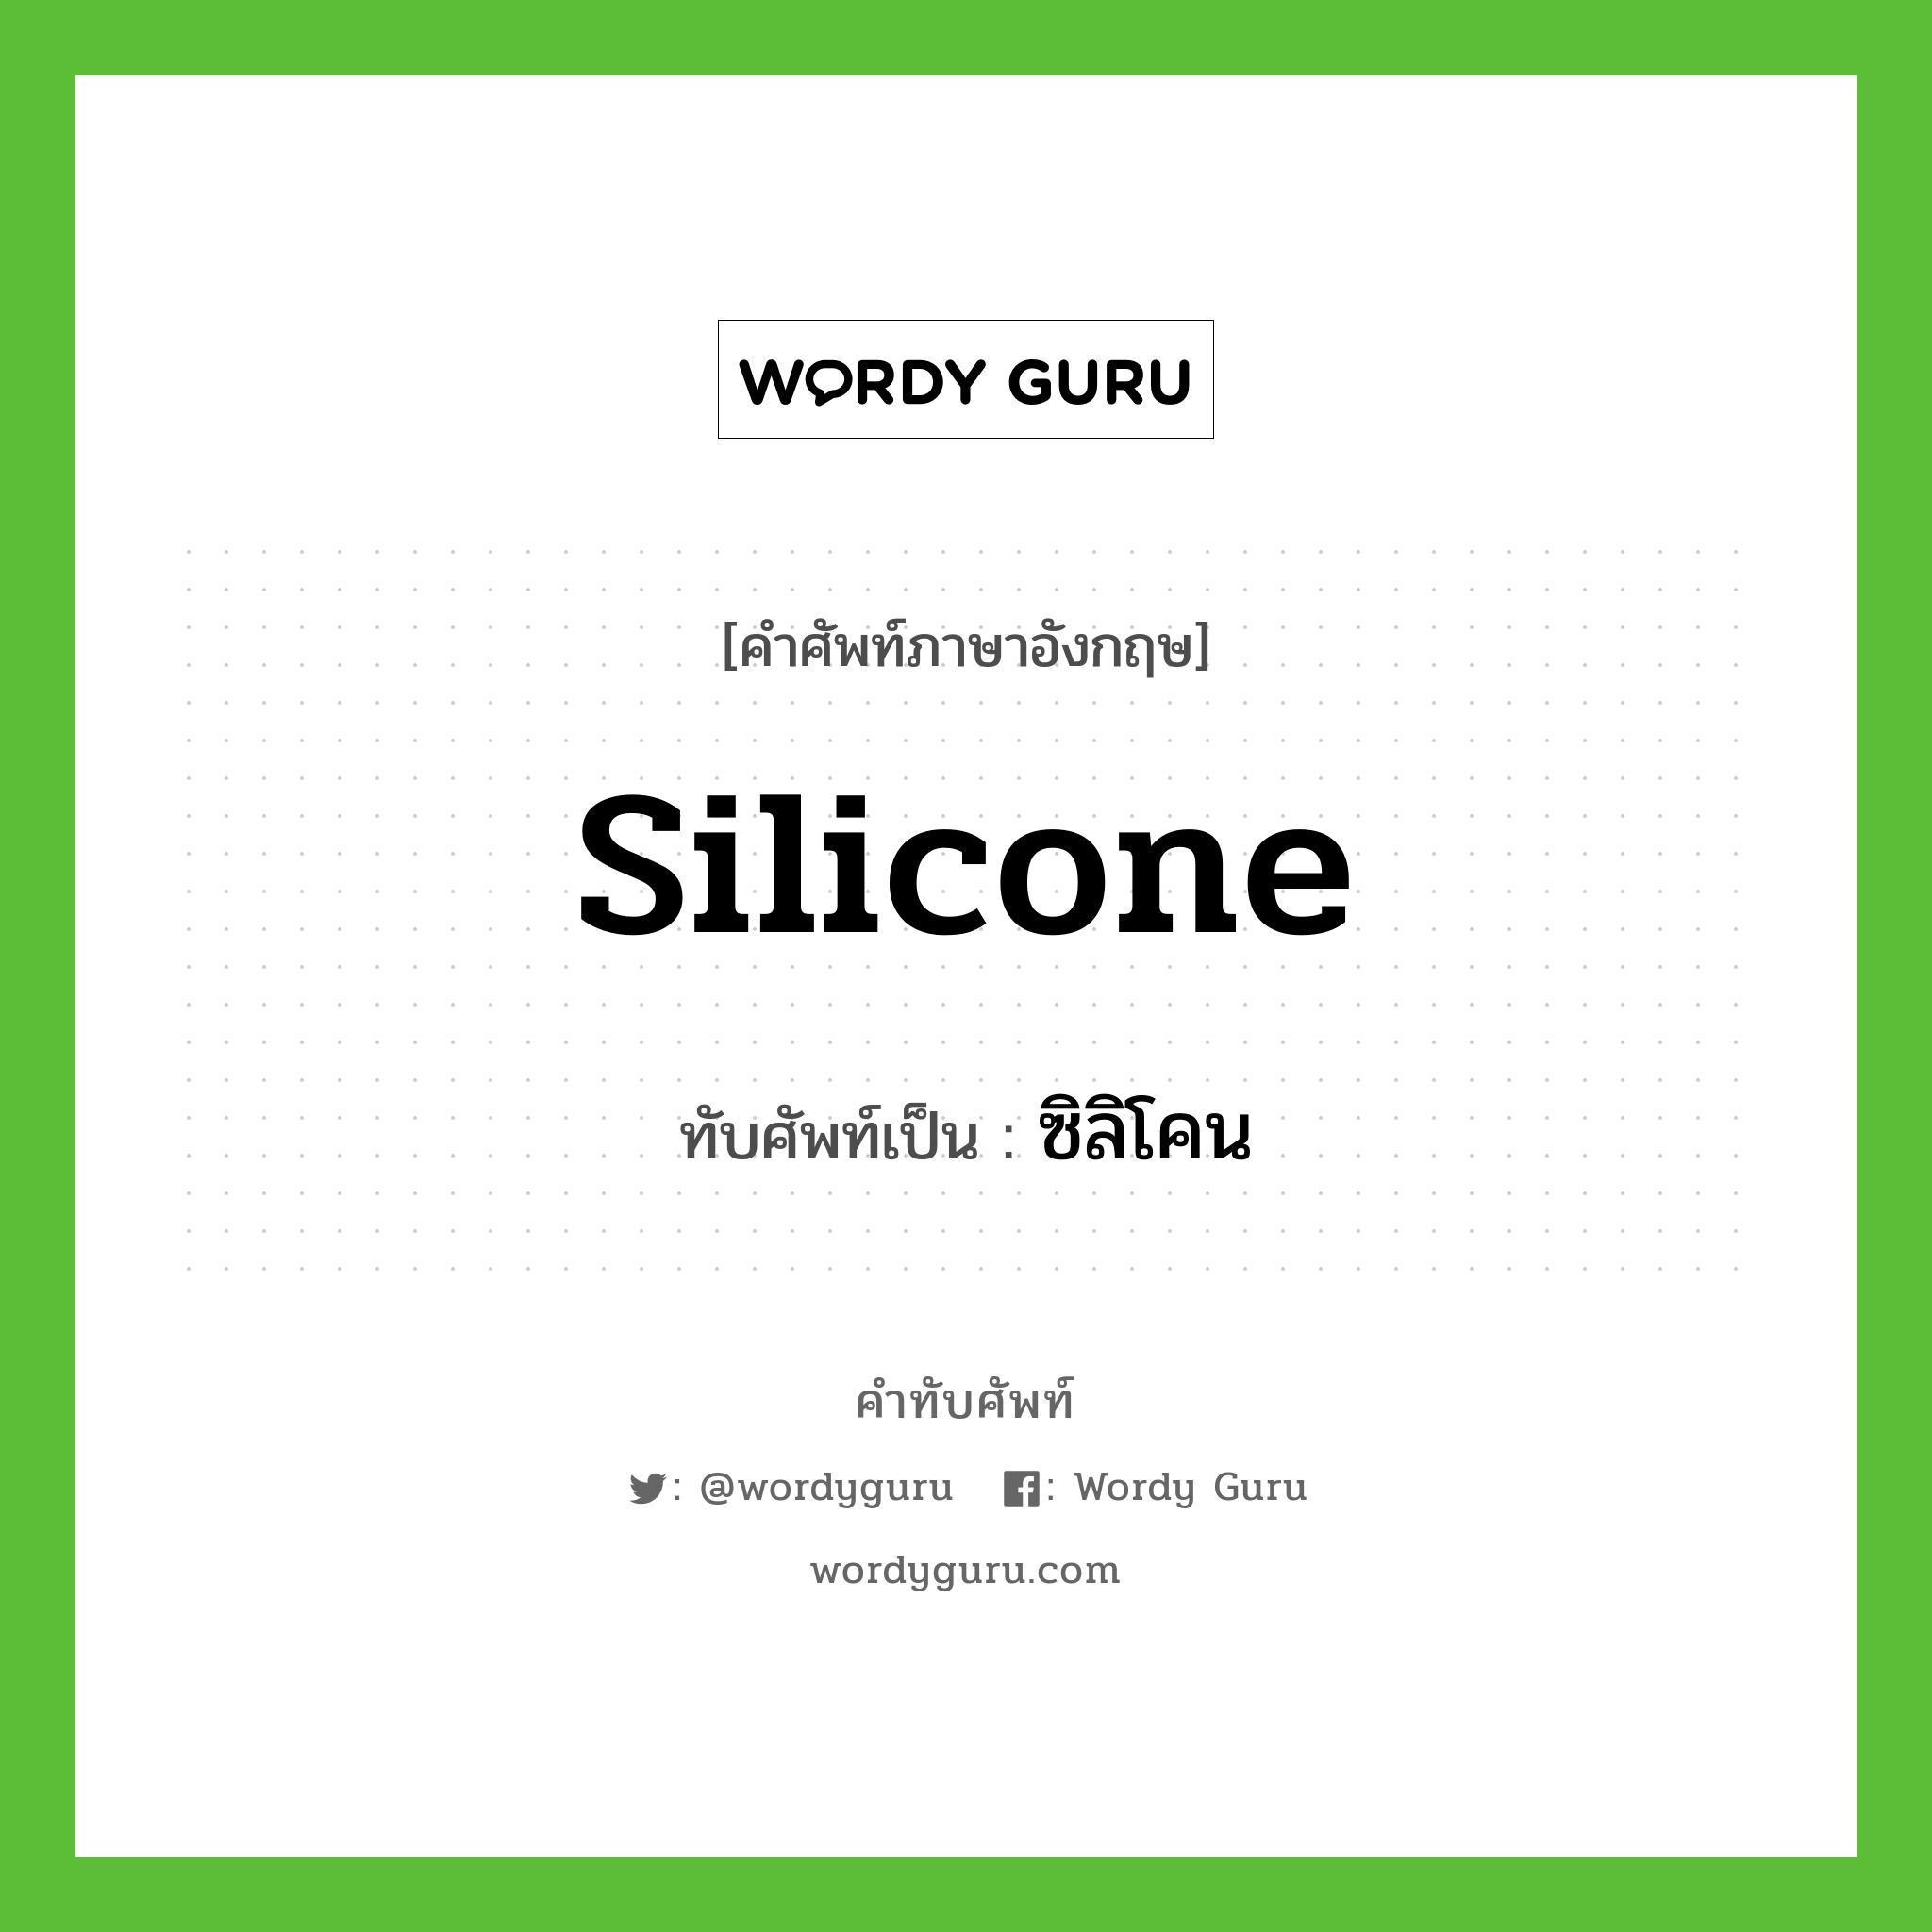 silicone เขียนเป็นคำไทยว่าอะไร?, คำศัพท์ภาษาอังกฤษ silicone ทับศัพท์เป็น ซิลิโคน